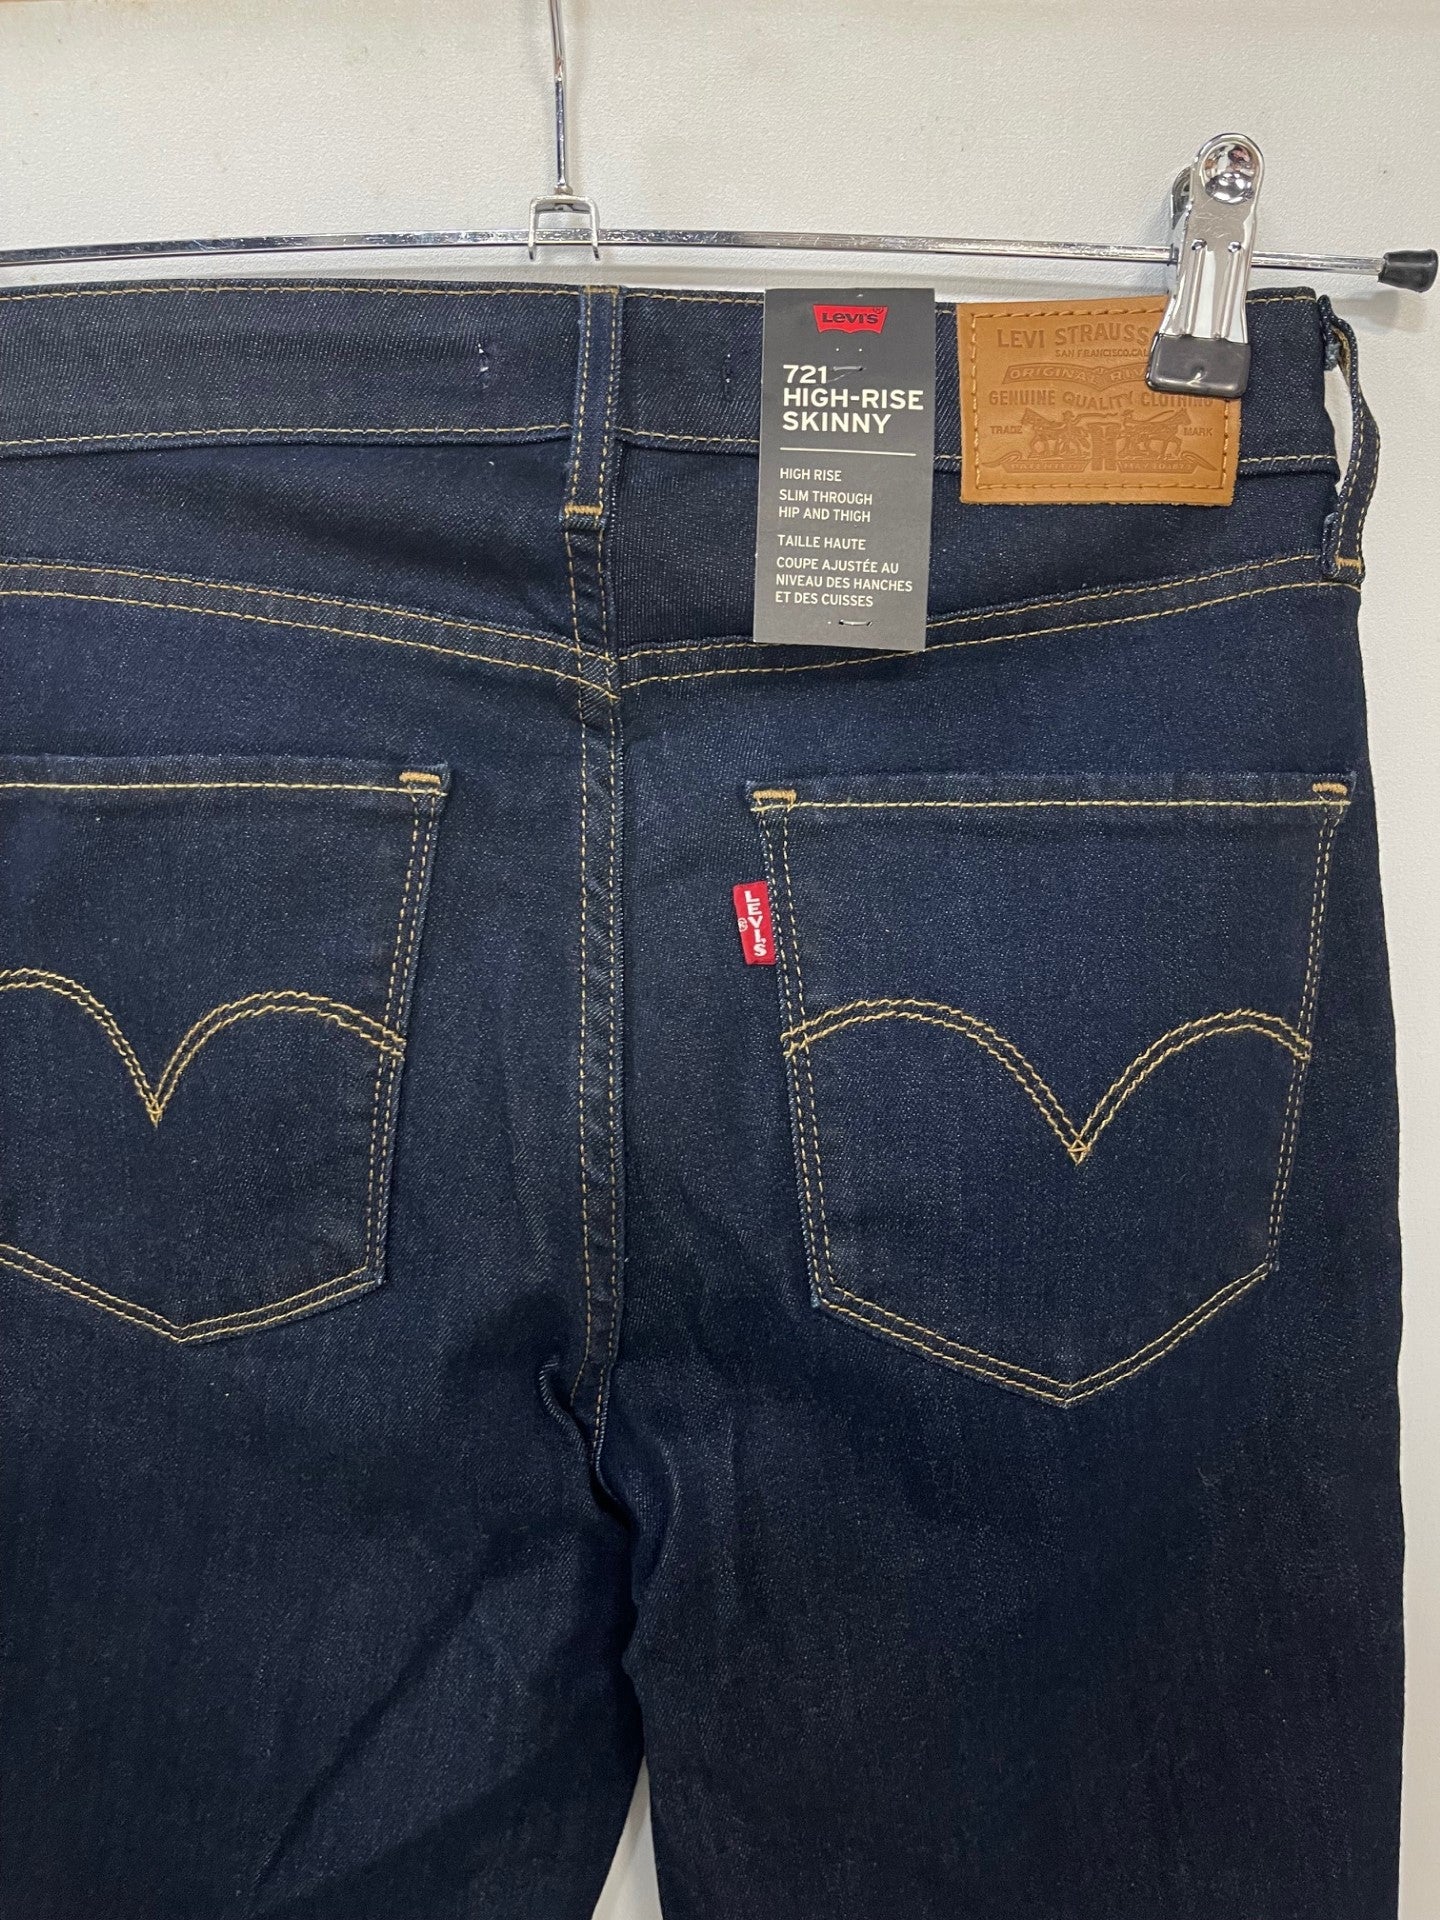 BNWT Levis Premium 721 High Rise Blue Skinny Jeans W27 L32